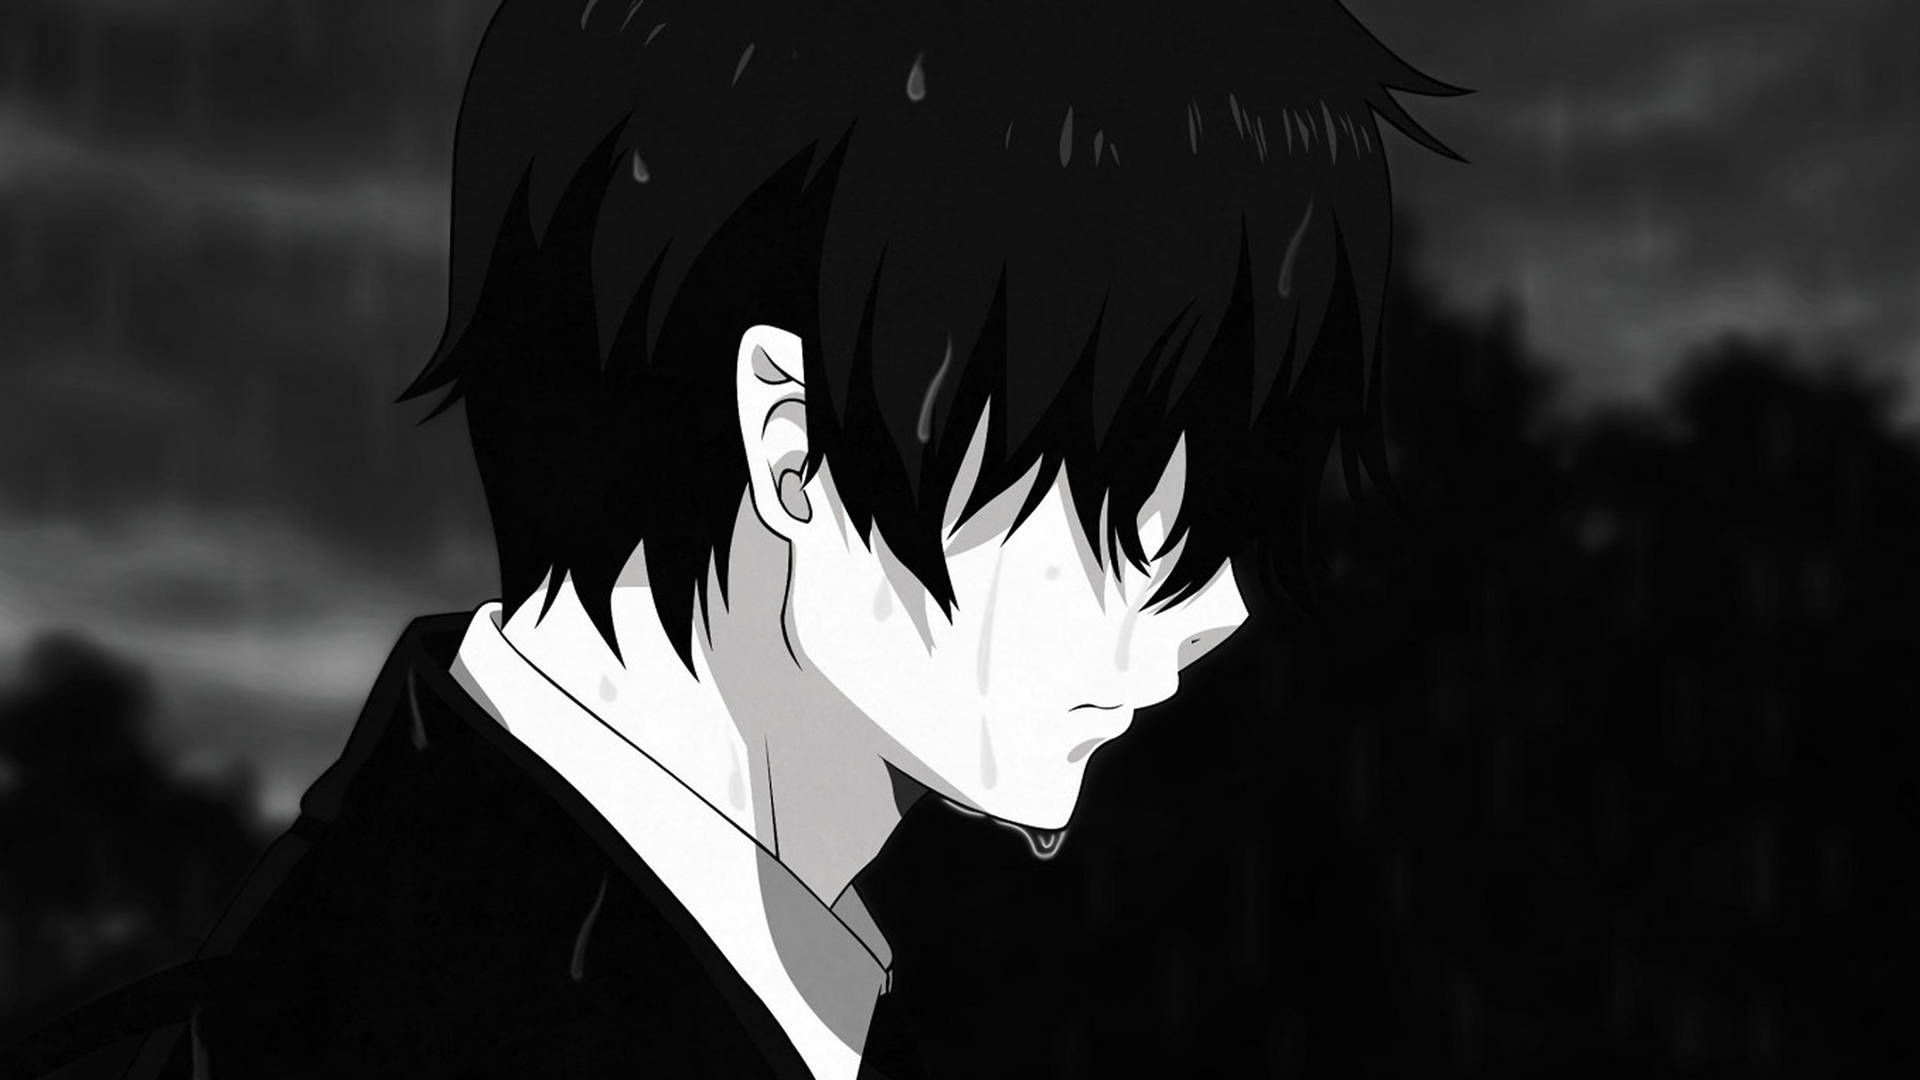 Sad anime wallpaper by LonelyAnime - Download on ZEDGE™ | 793c